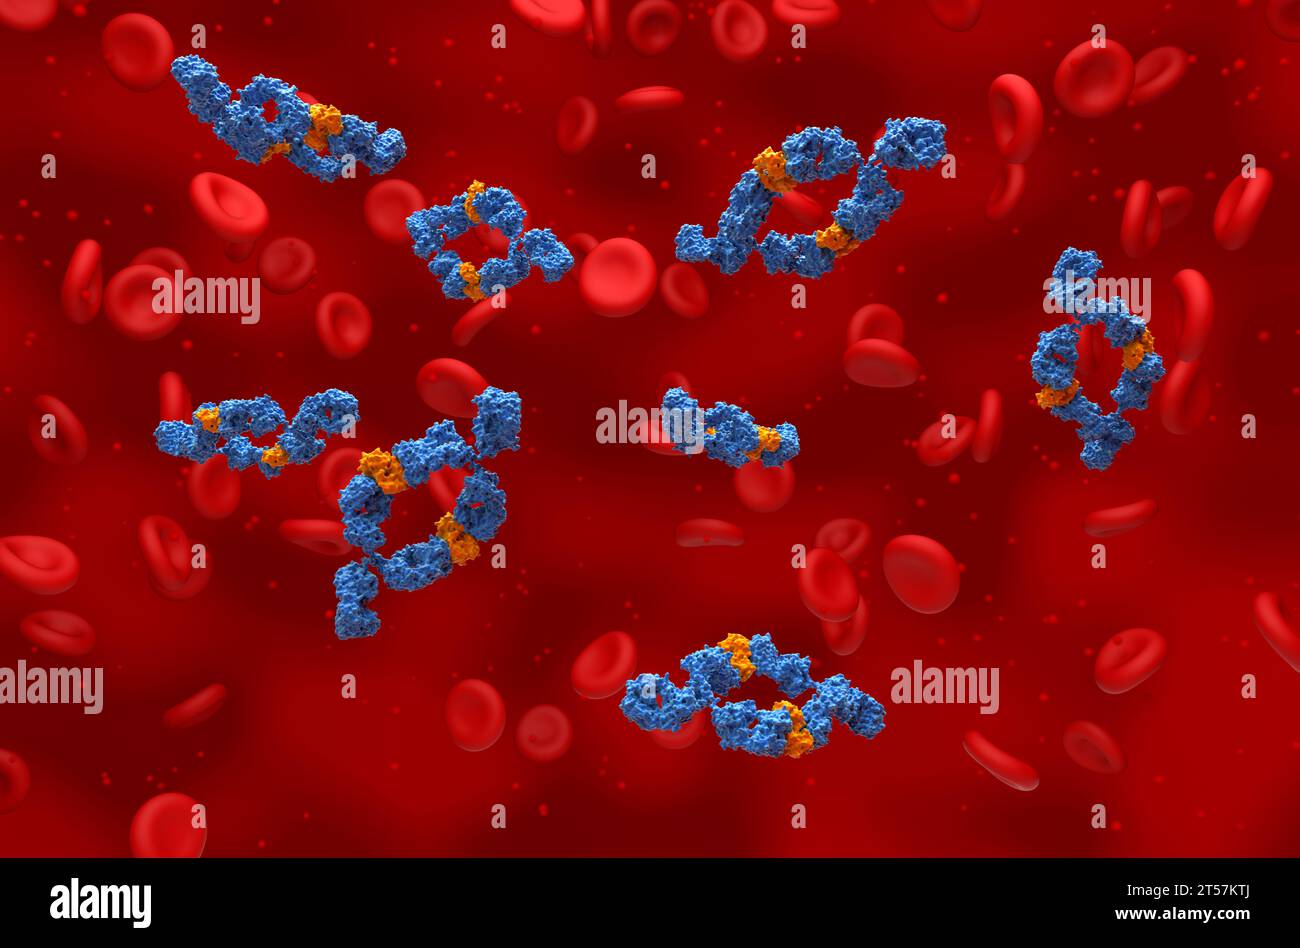 Monoclonal antibodies (Adalimumab) - isometric view 3d illustration Stock Photo